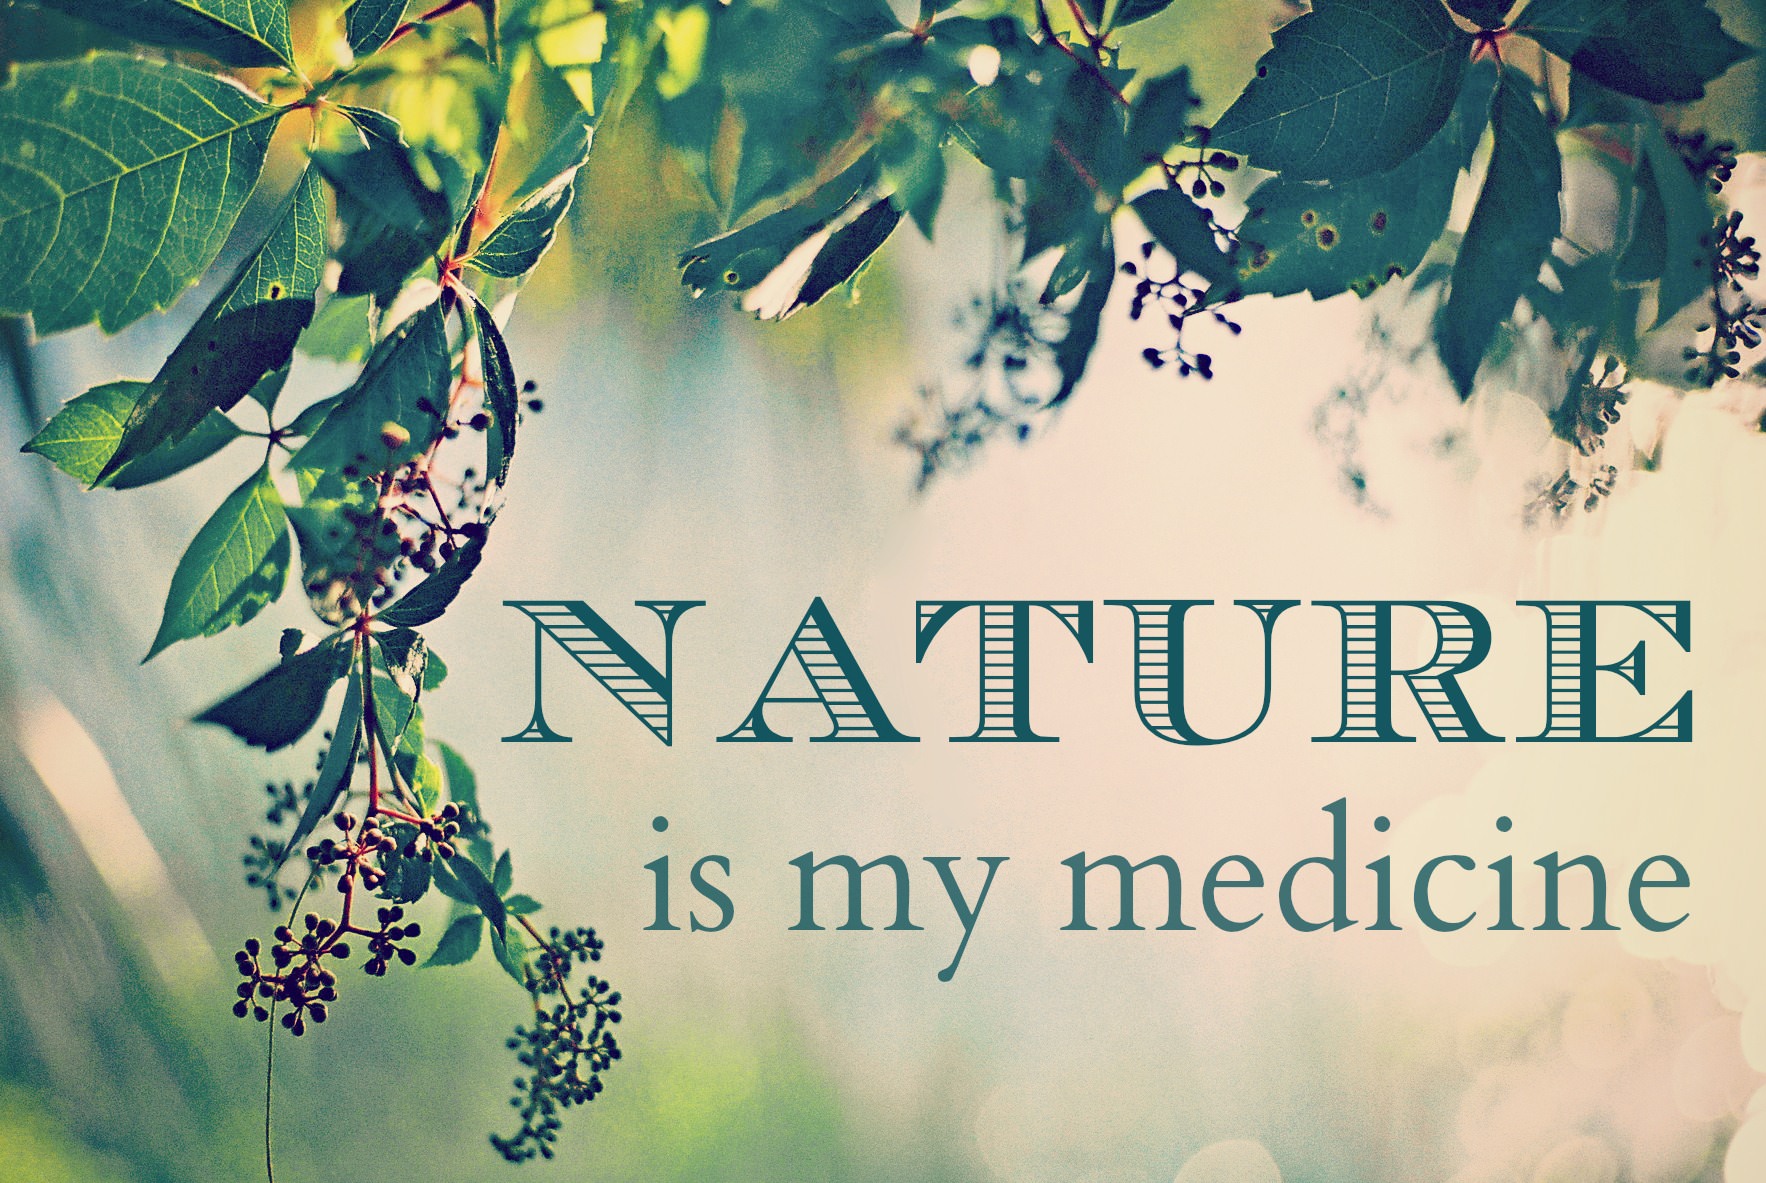 Natural medicine